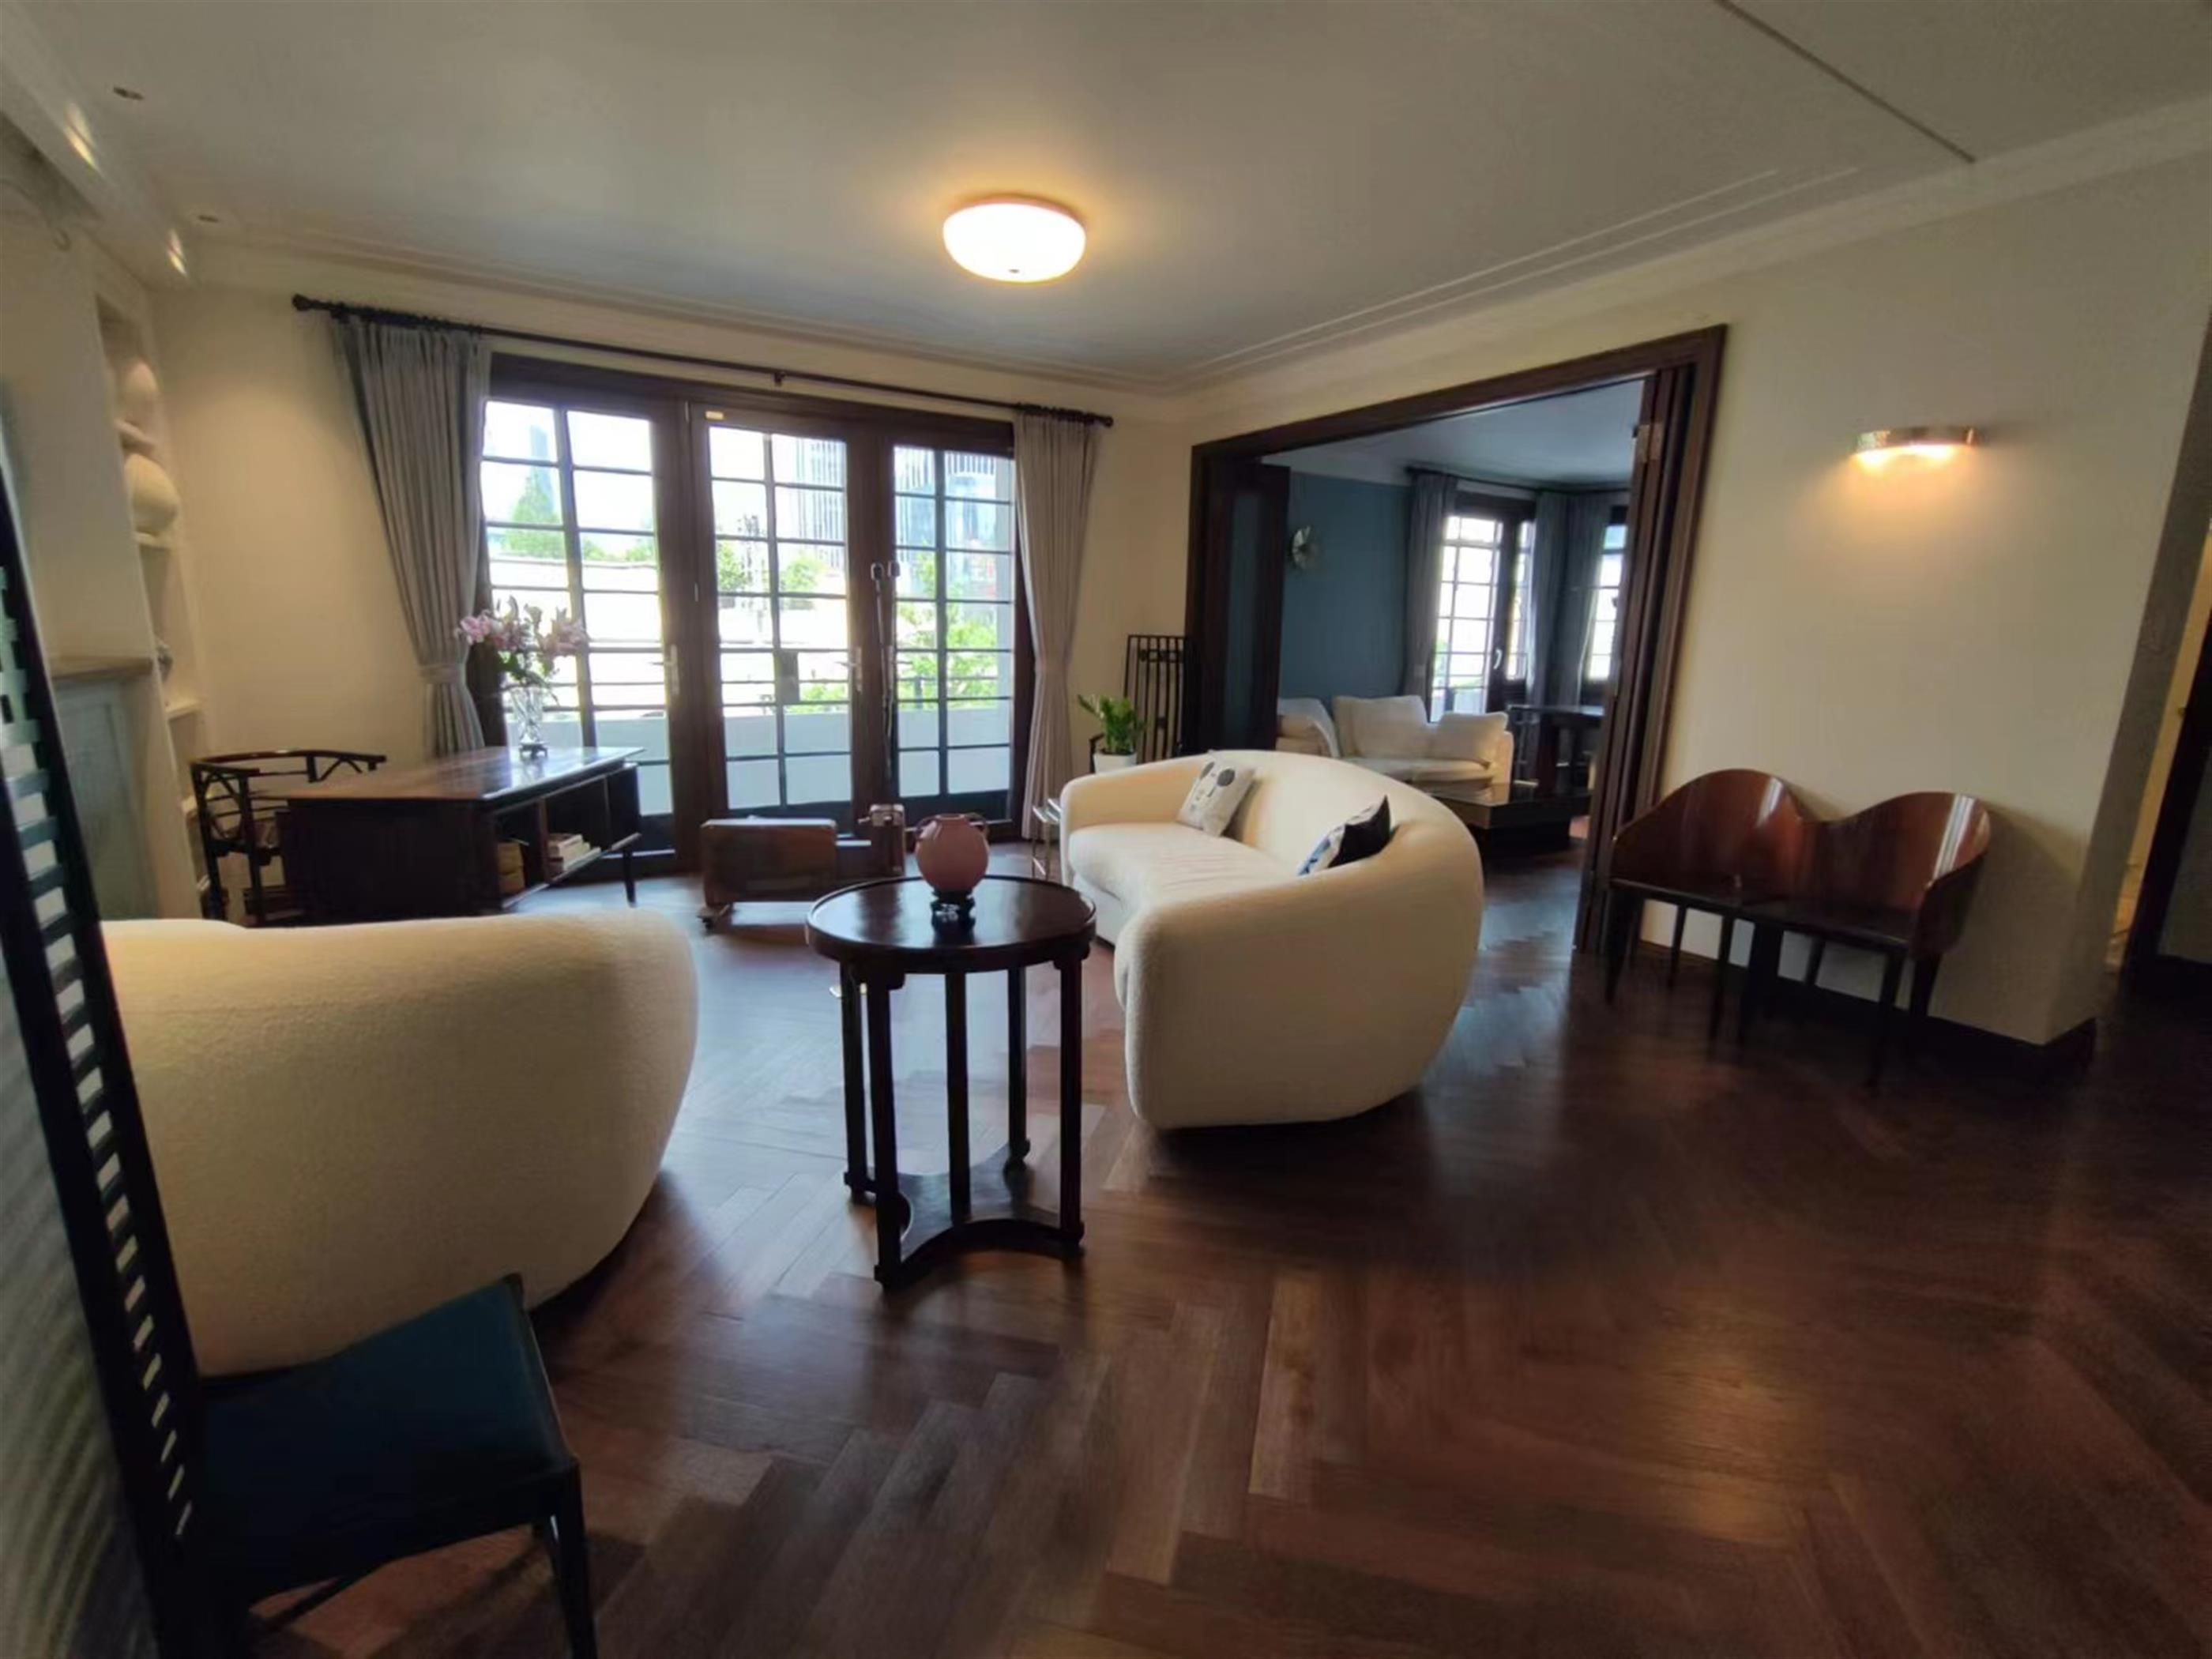 Gorgeous parquet floors Luxury Spacious Modern 3BR Apartment for Rent in Shanghai